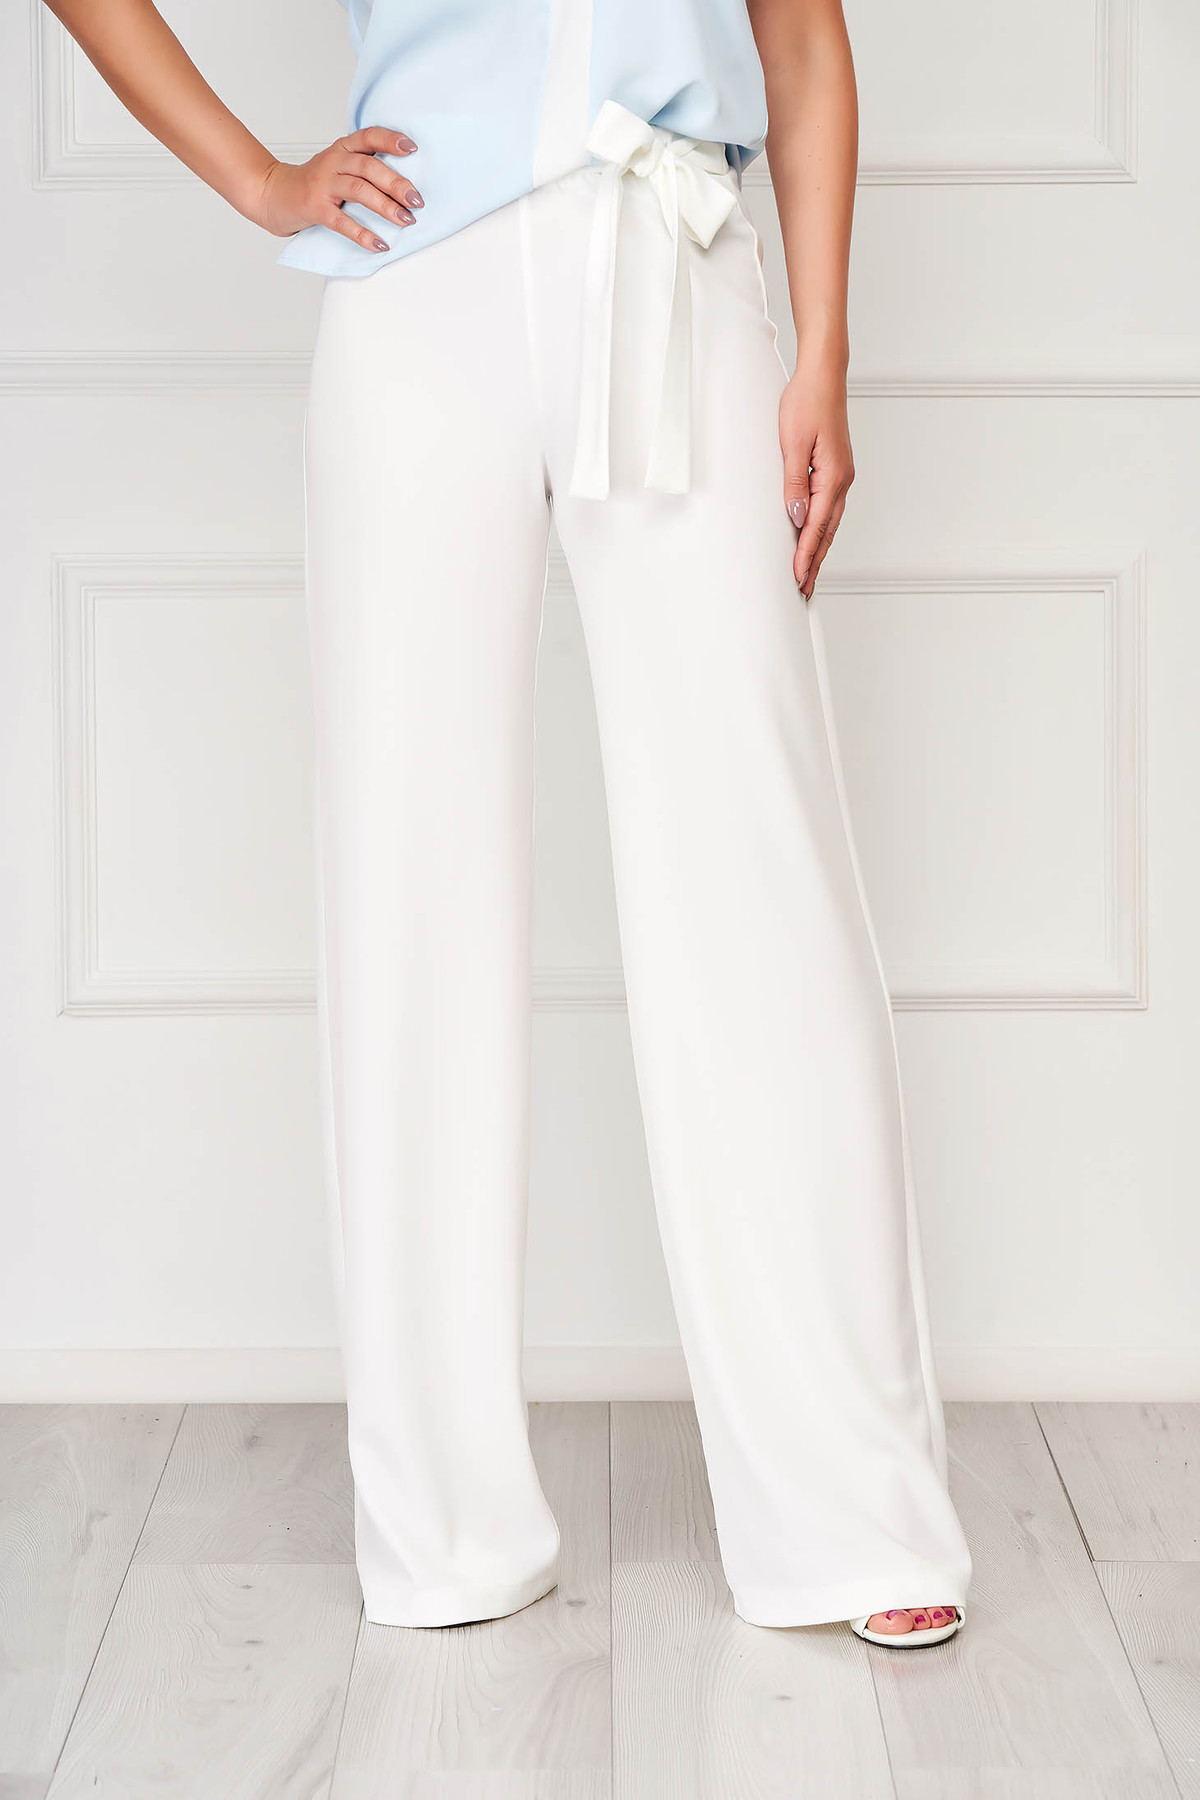 Pantaloni StarShinerS albi eleganti evazati cu talie inalta din stofa usor elastica accesorizati cu cordon